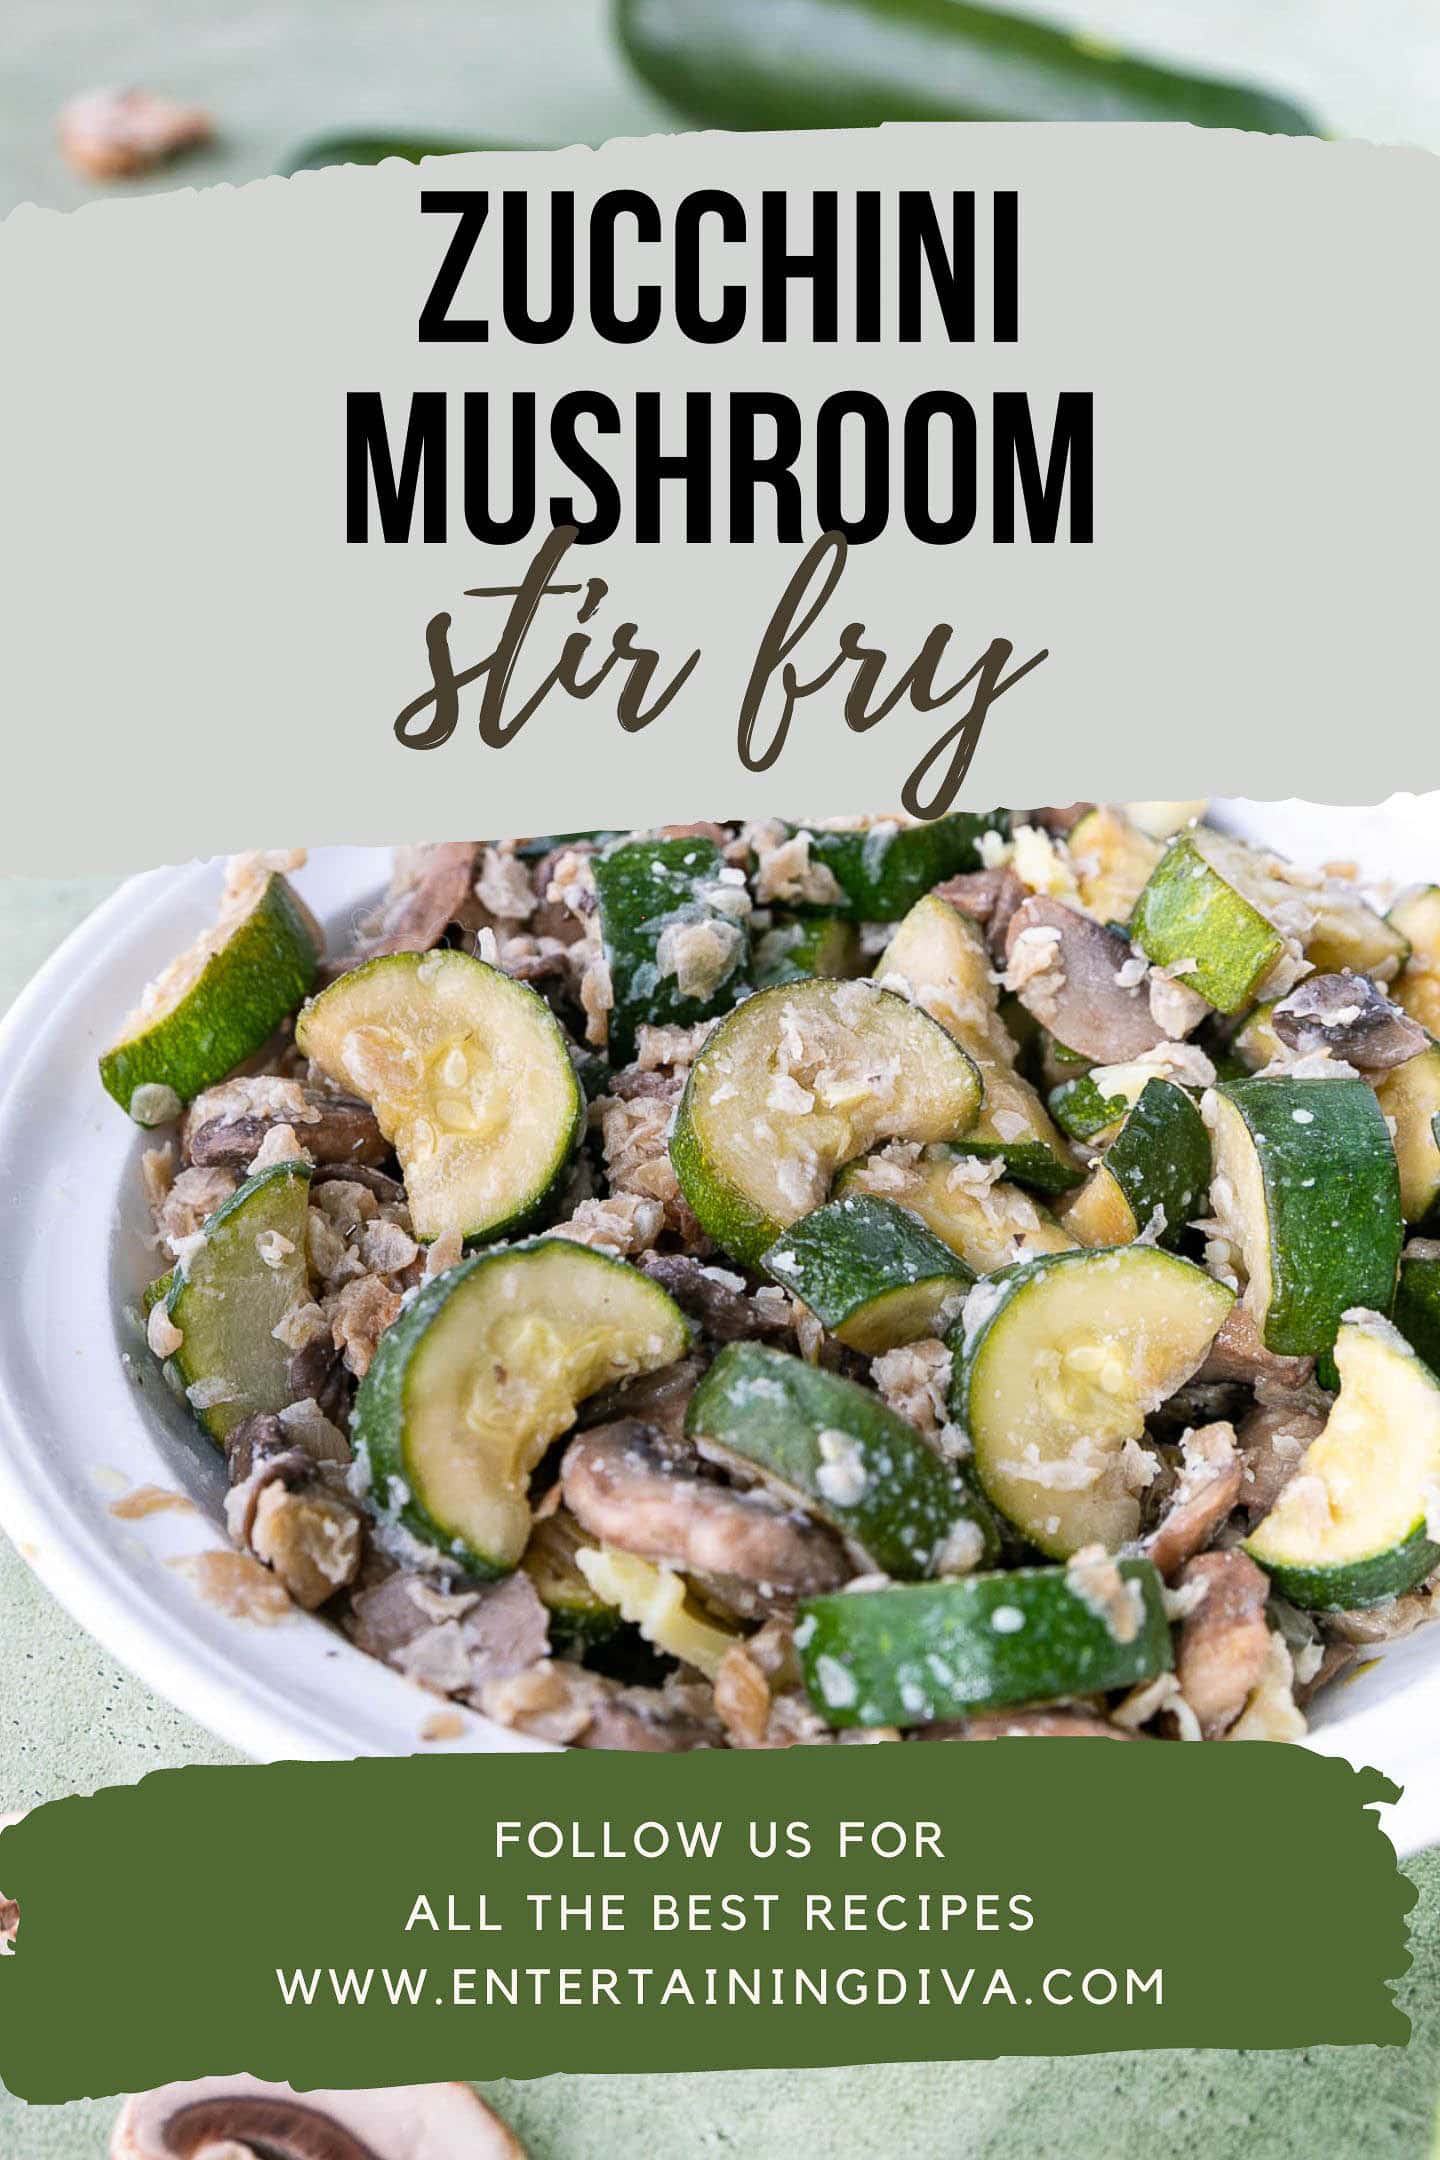 zucchini mushroom stir fry with text overlay